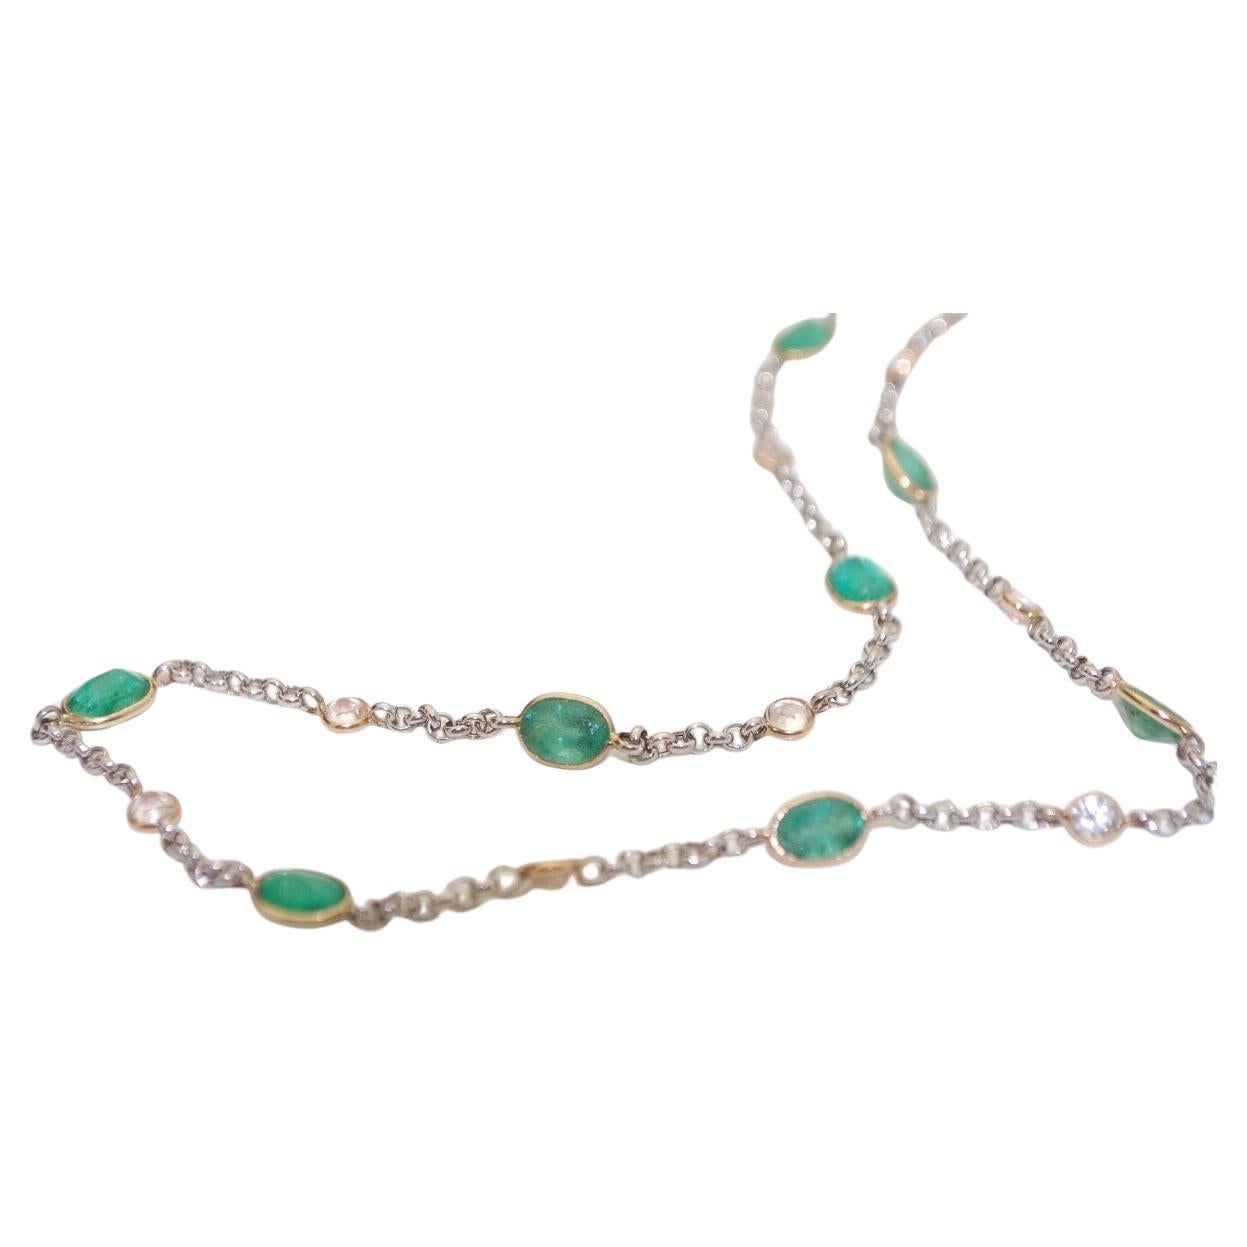 Emerald and diamond necklace 18" rolo style diamonds by the yard bezel set 14KT